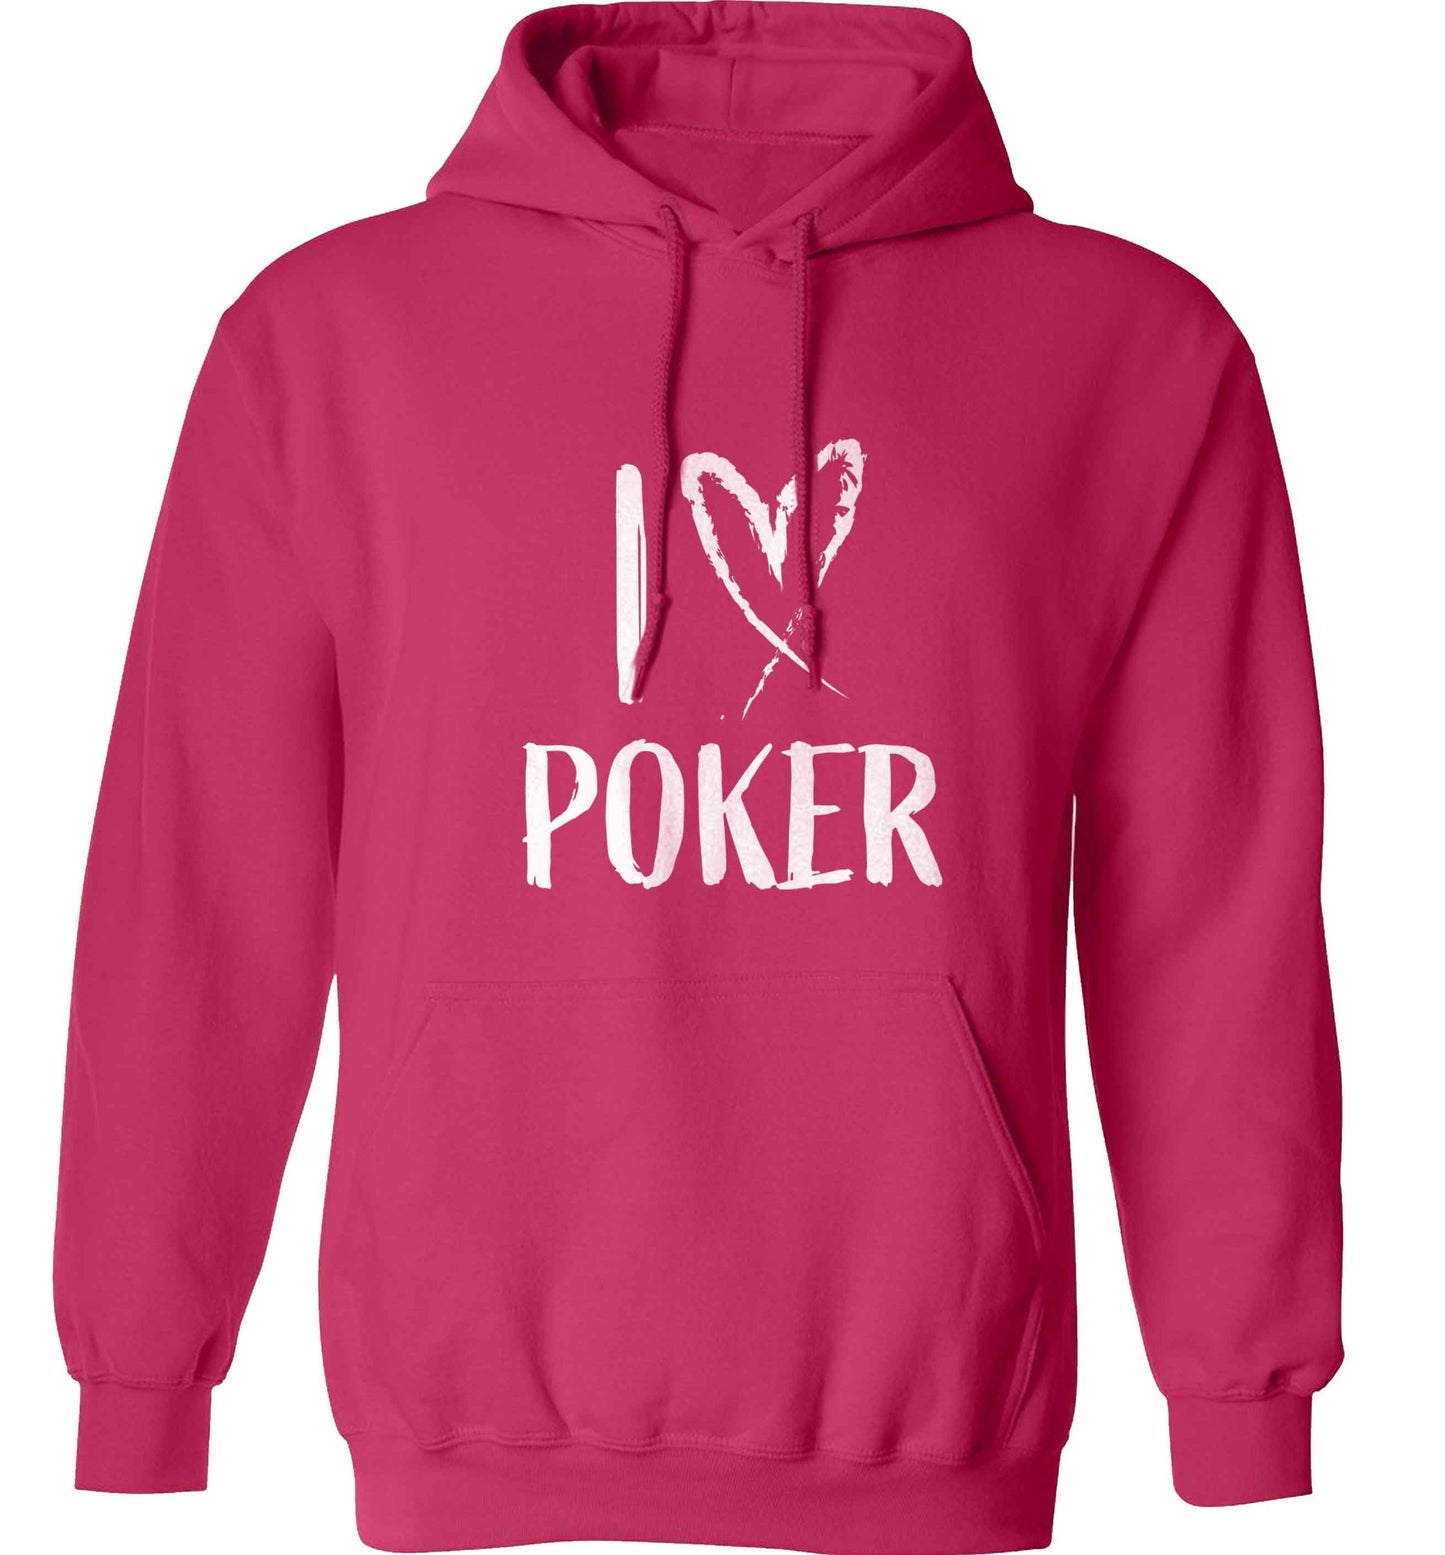 I love poker adults unisex pink hoodie 2XL